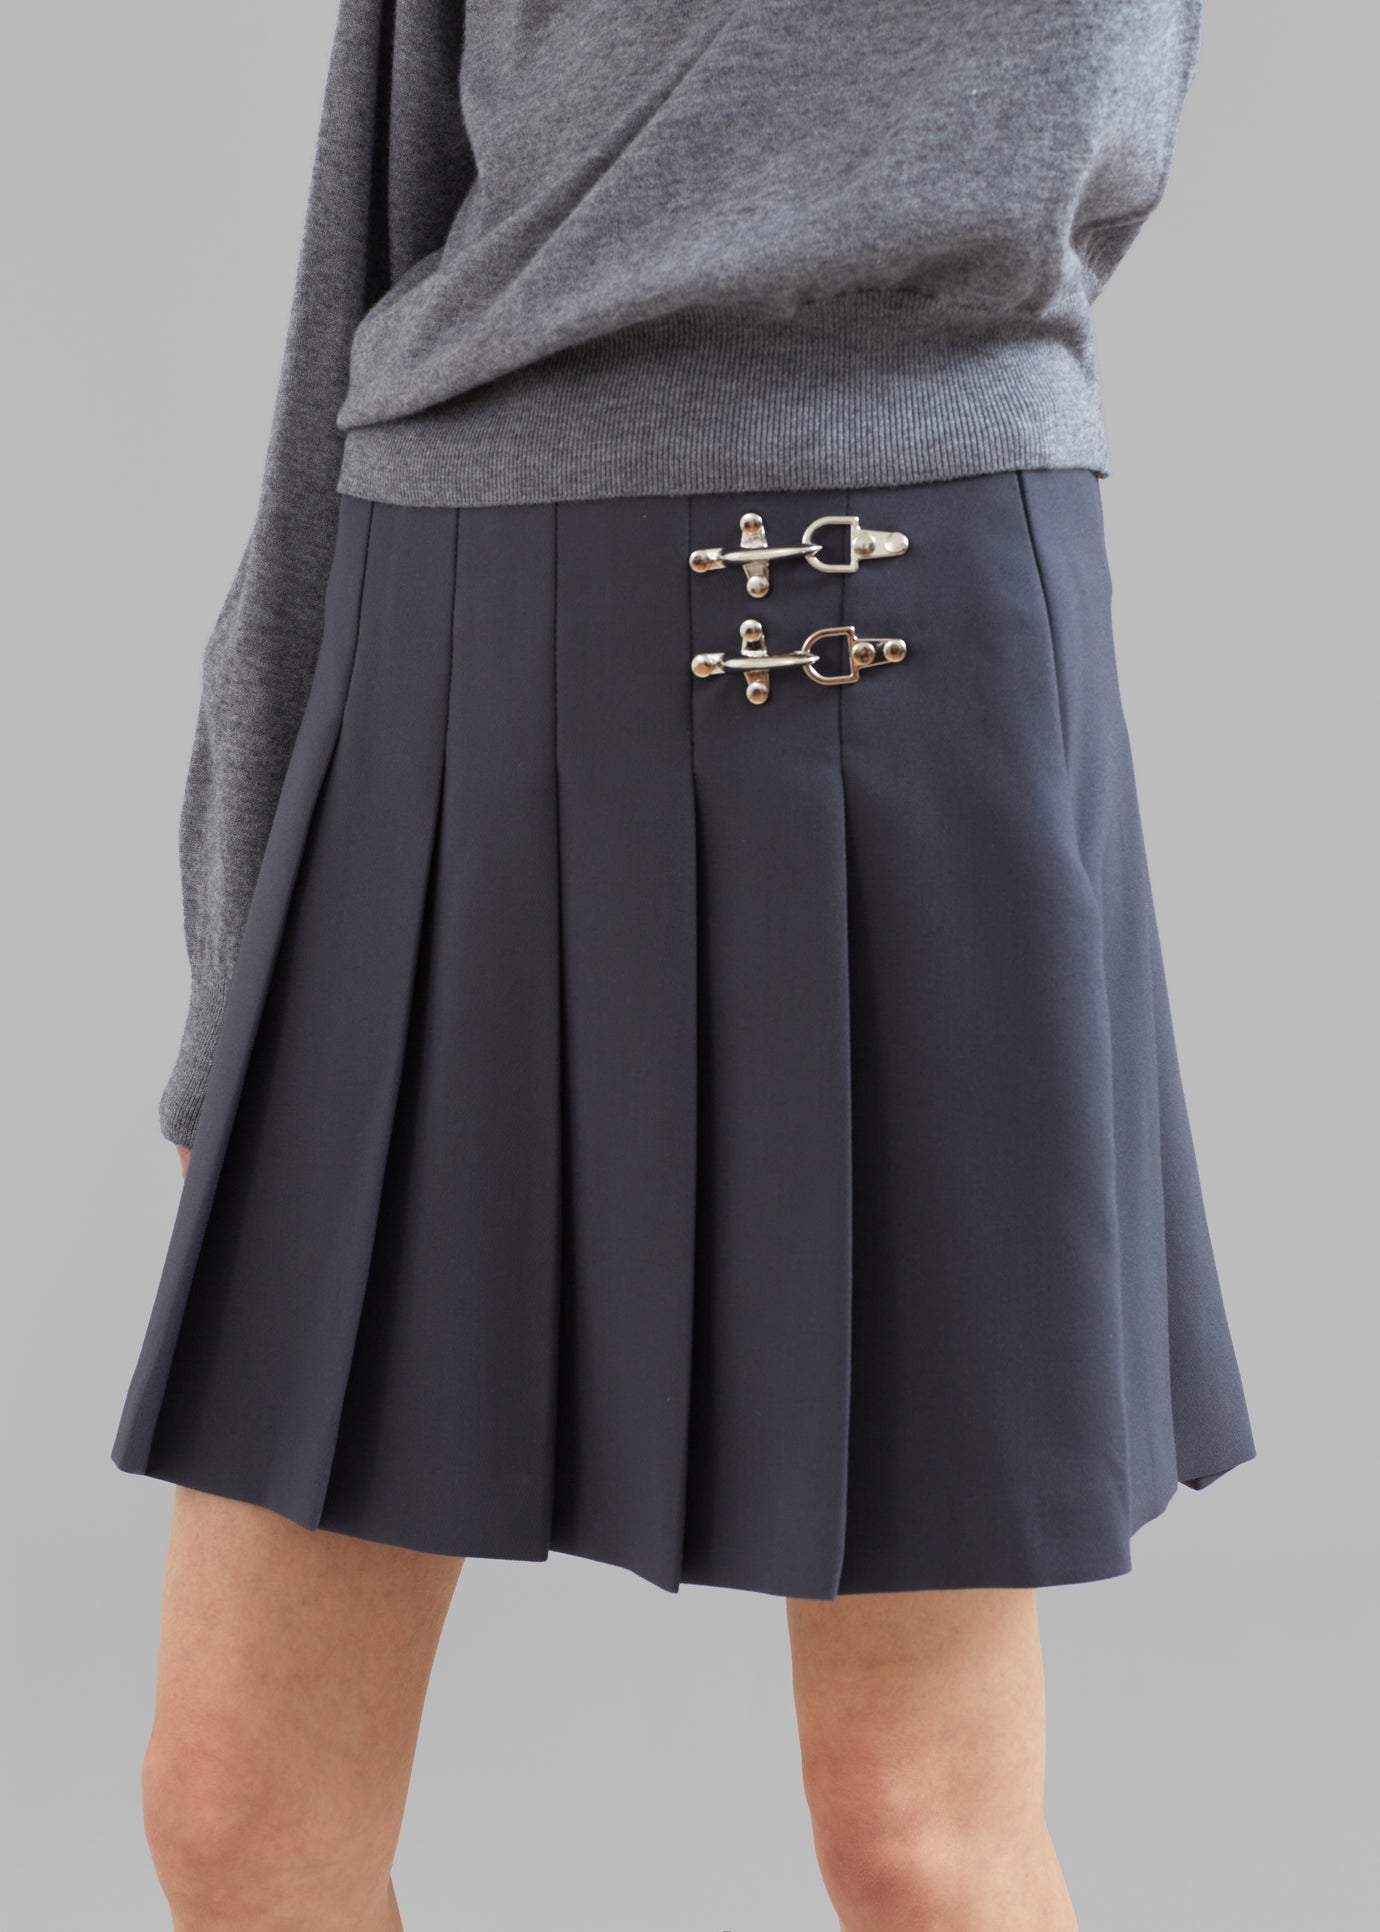 Nyra Pleated Skirt - Charcoal - 1